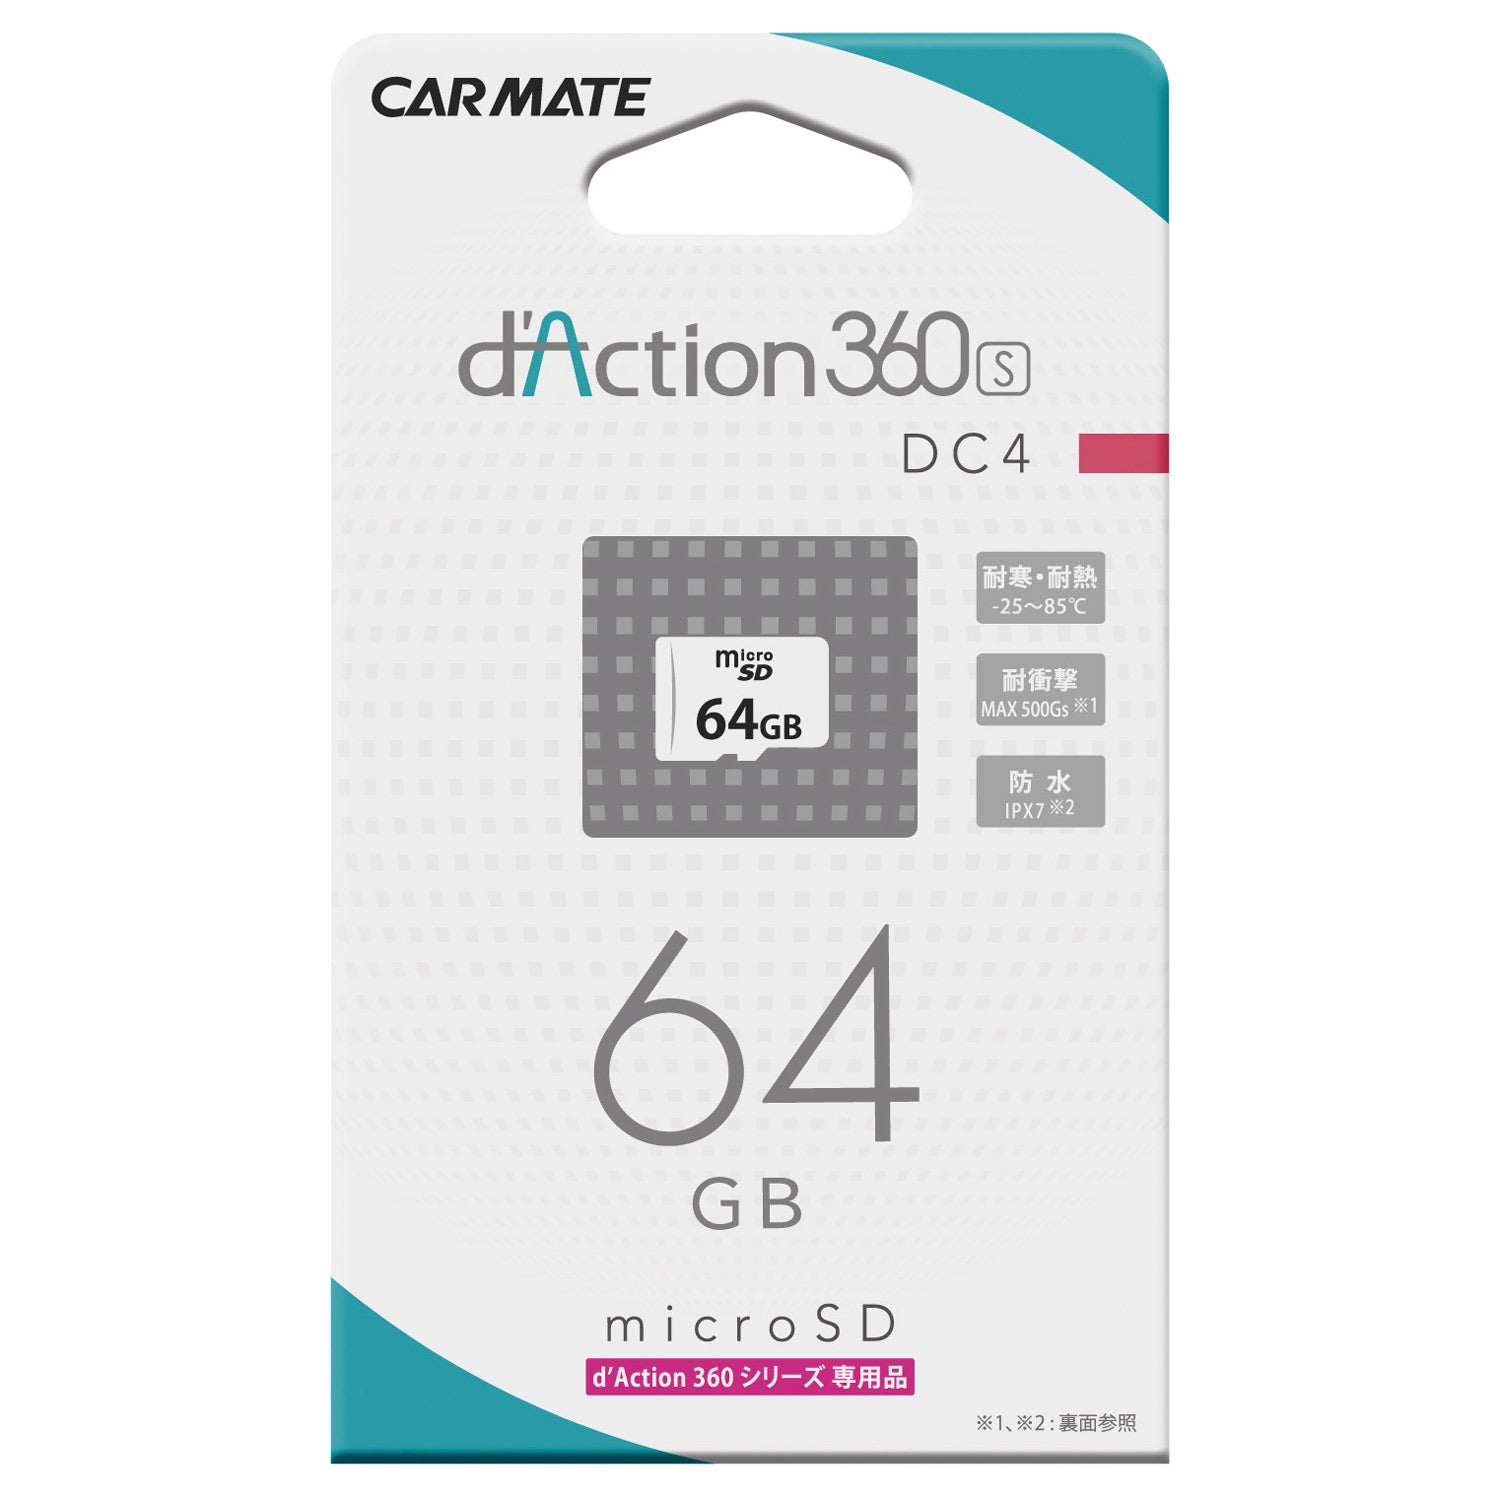 Trekker engel aankomen DC4A 64GB Micro SD Card – Carmate USA, Inc.